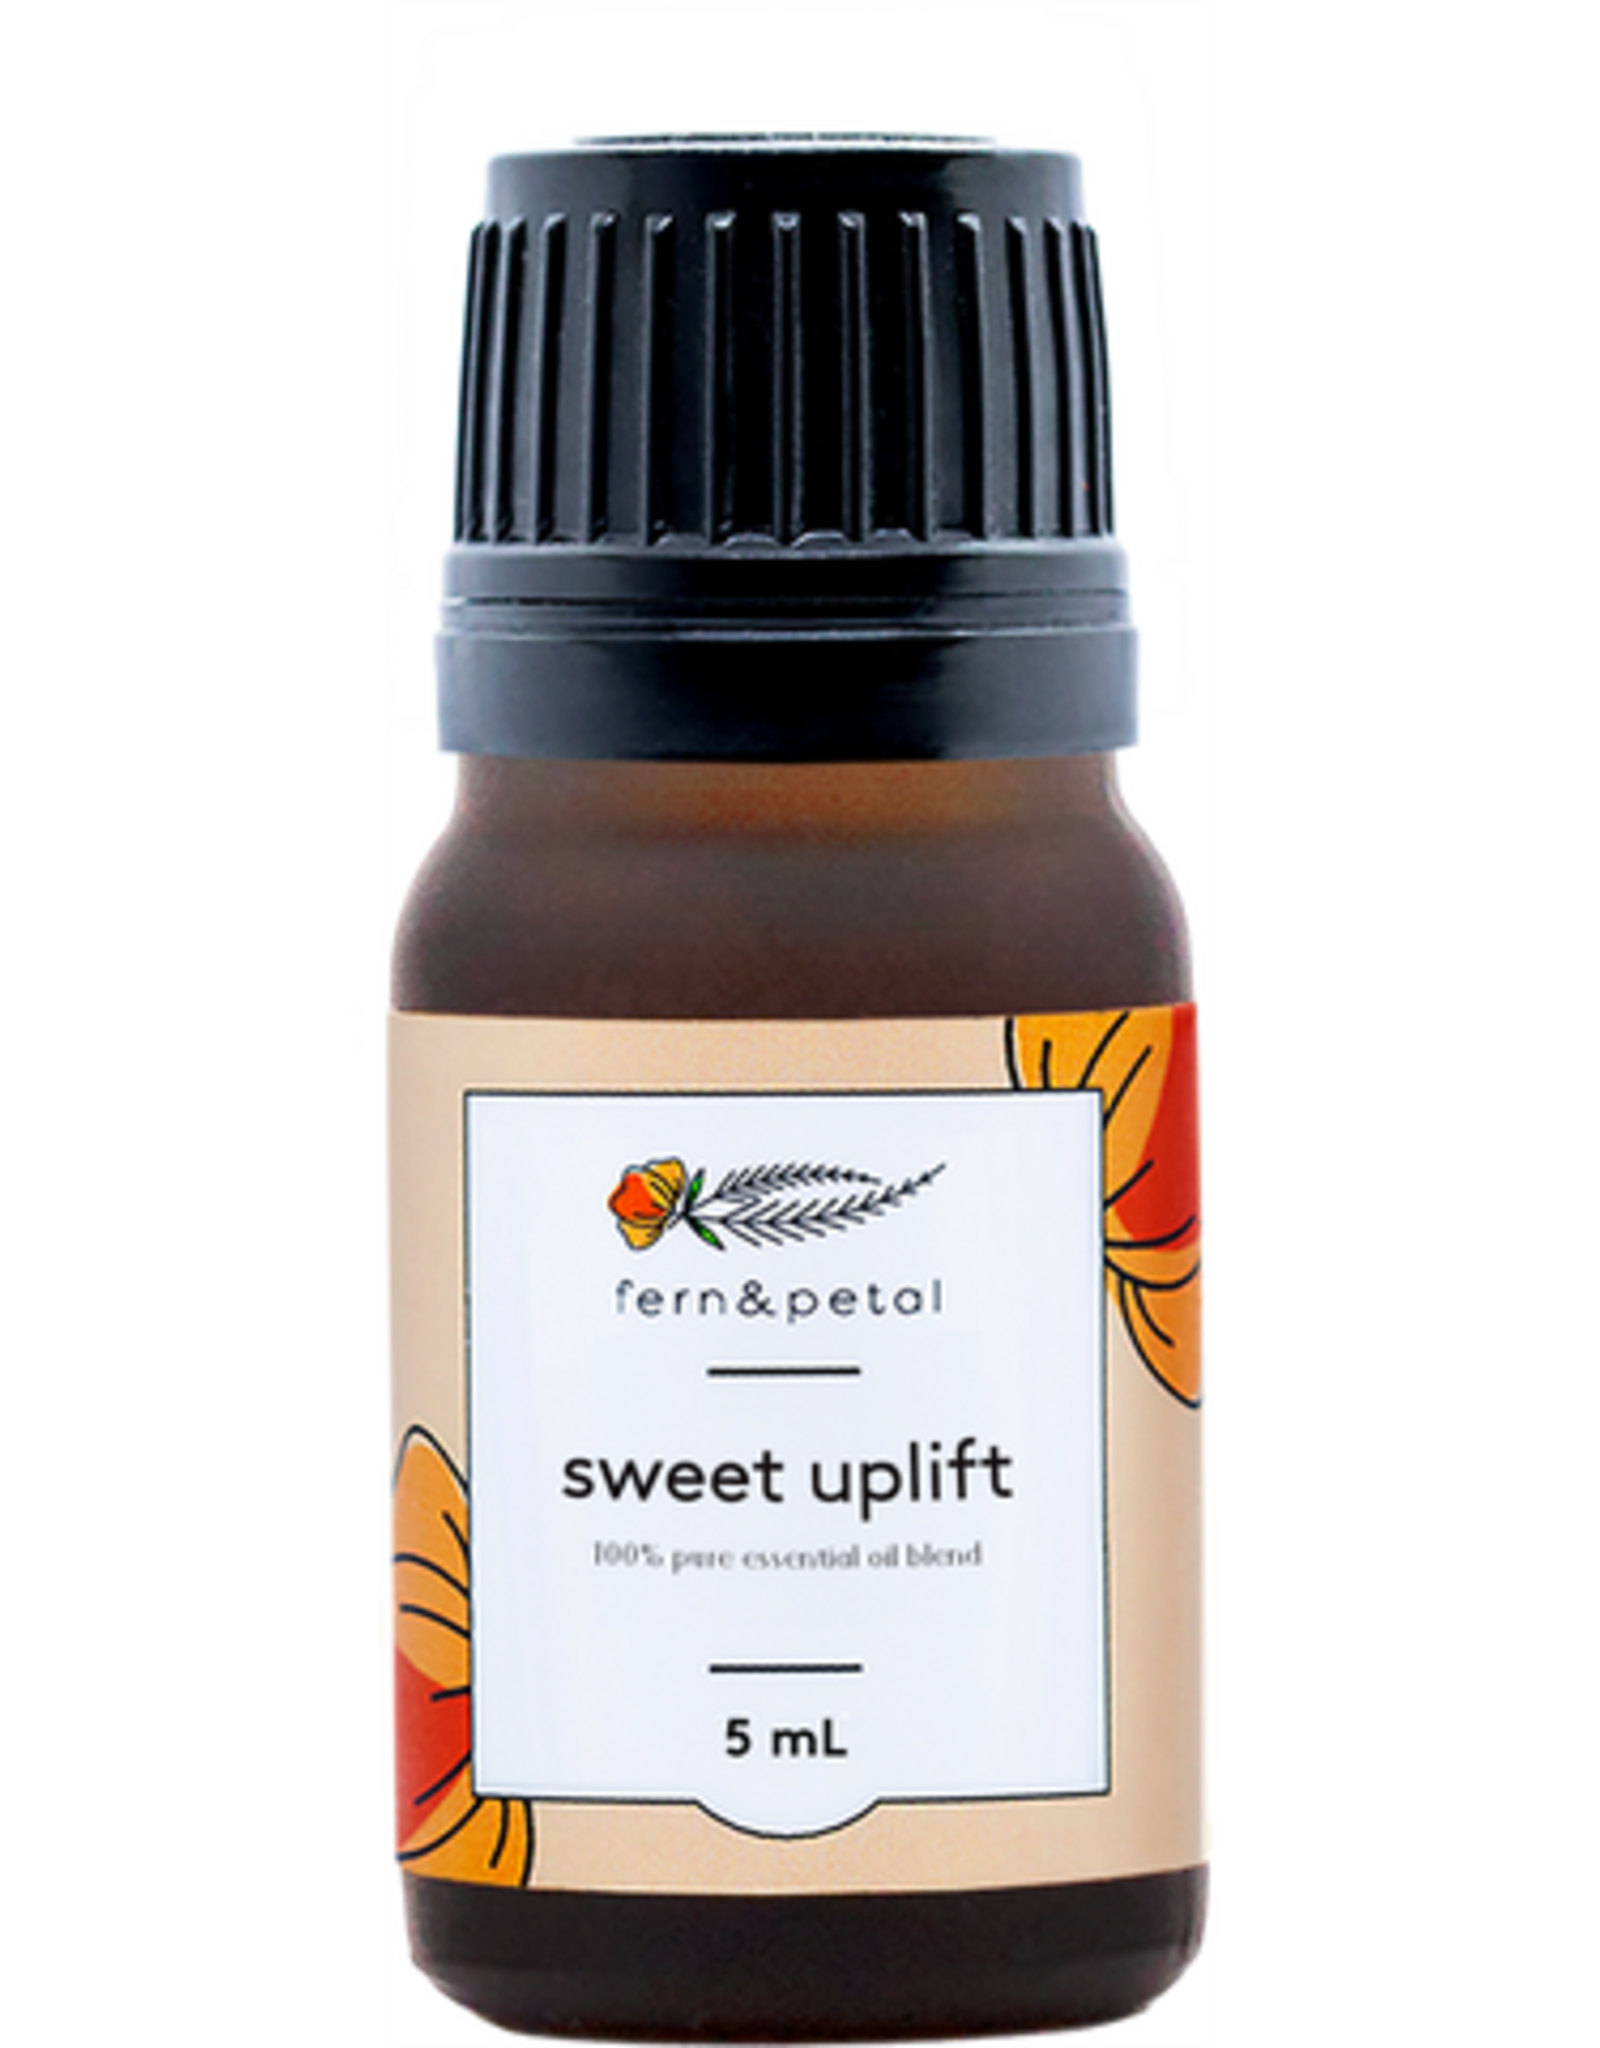 Fern & Petal Sweet Uplift Essential oil blend 5ml